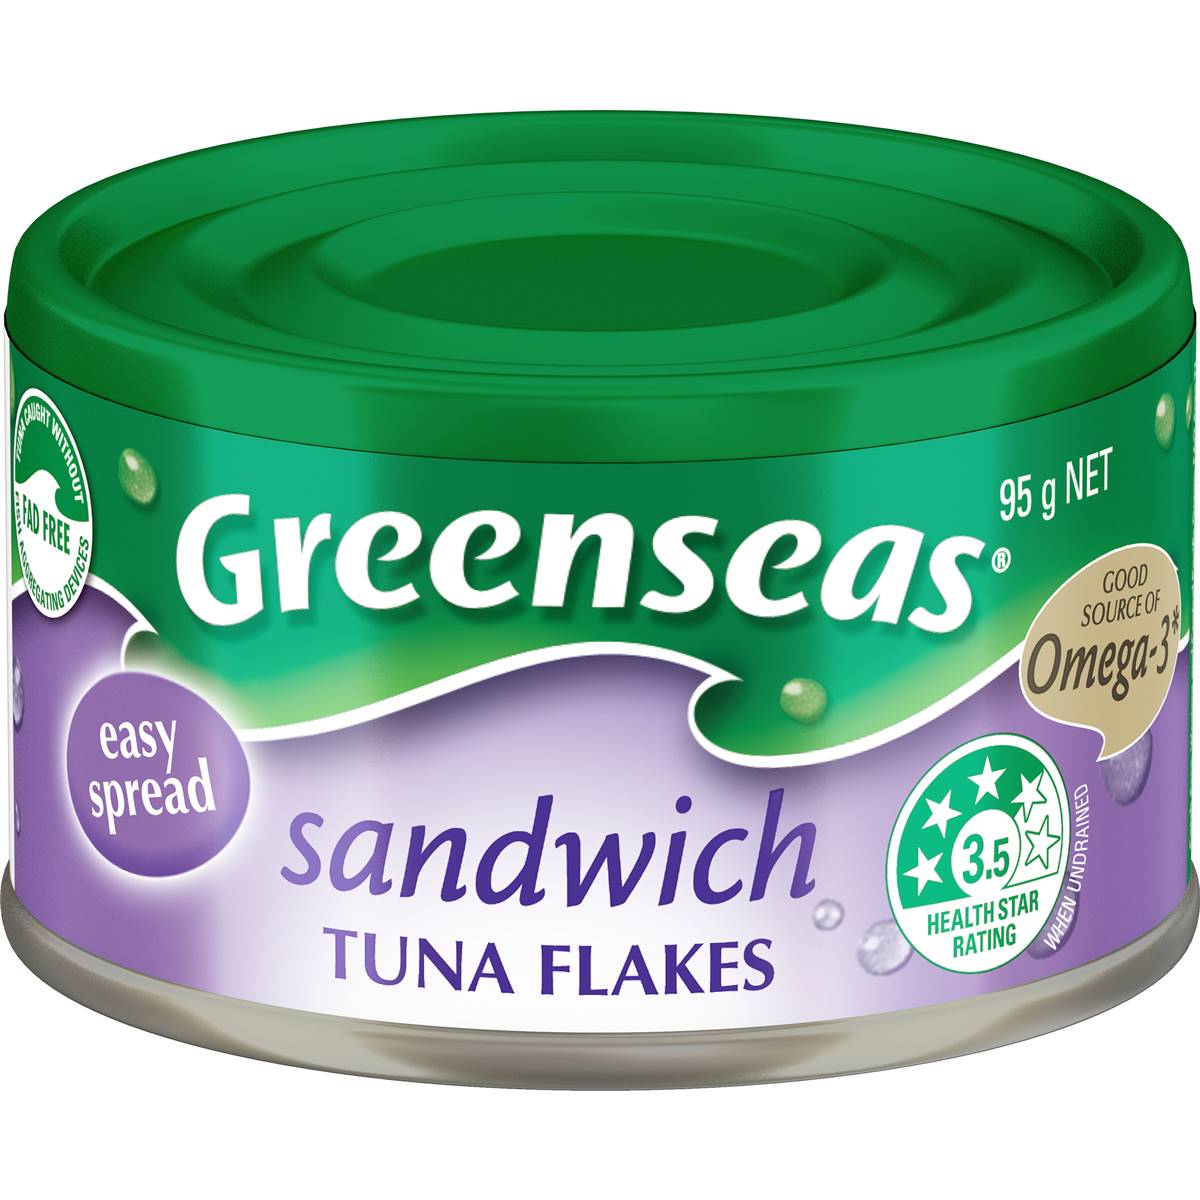 Calories in Greenseas Sandwich Tuna Flakes Sandwich Flakes